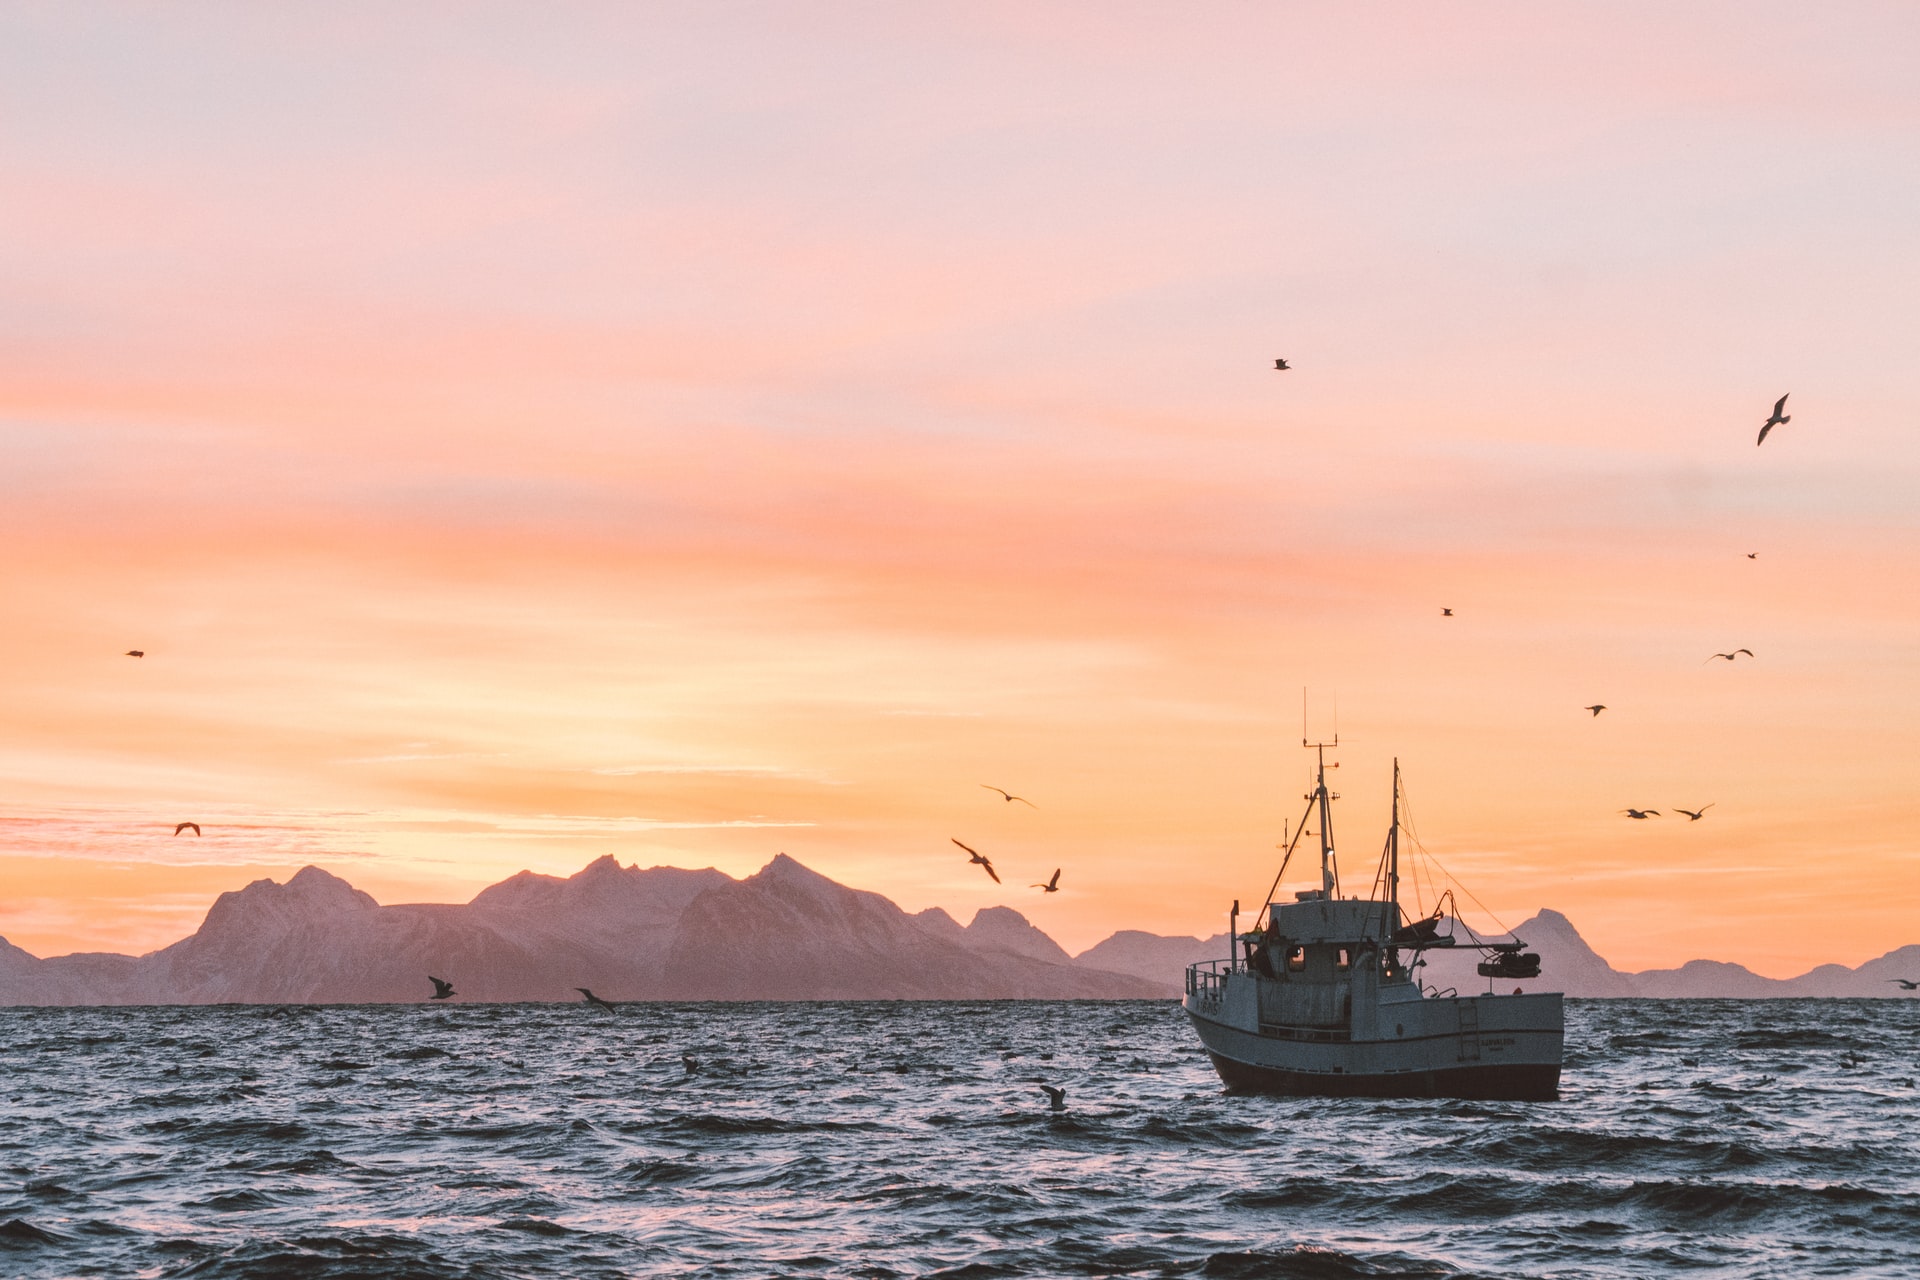 a fishing trawler at sunset